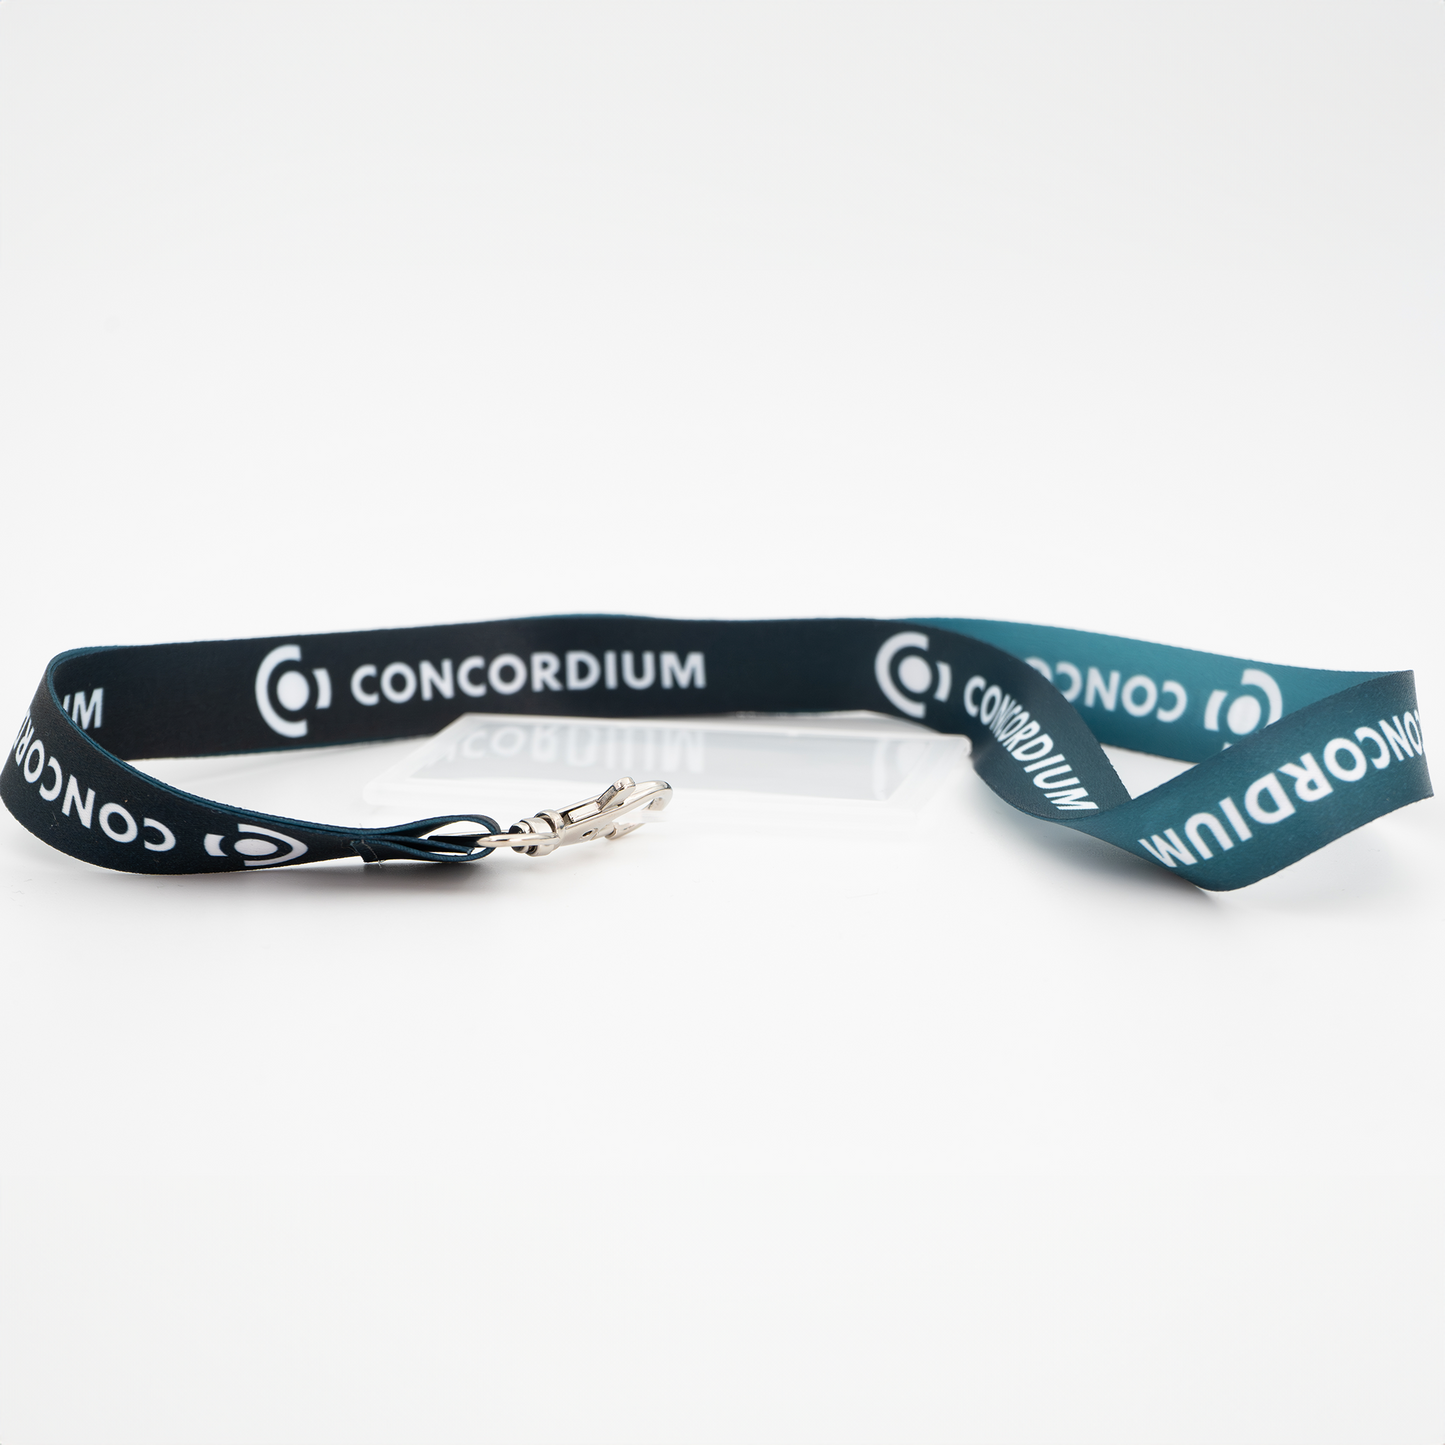 Concordium Branded Keychain